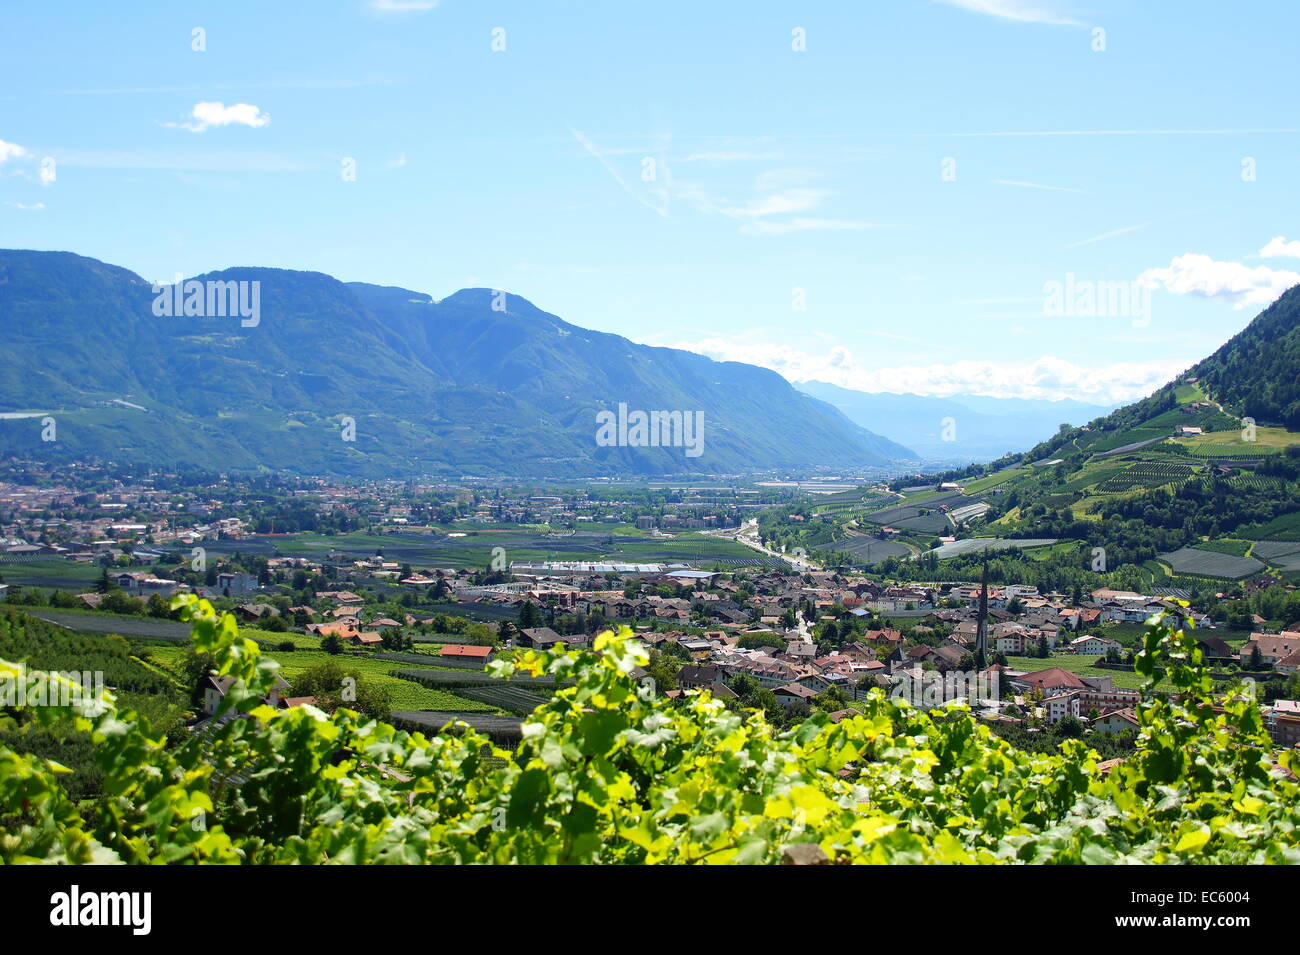 Dorf Tirol, Meran and Algund in South Tyrol Stock Photo